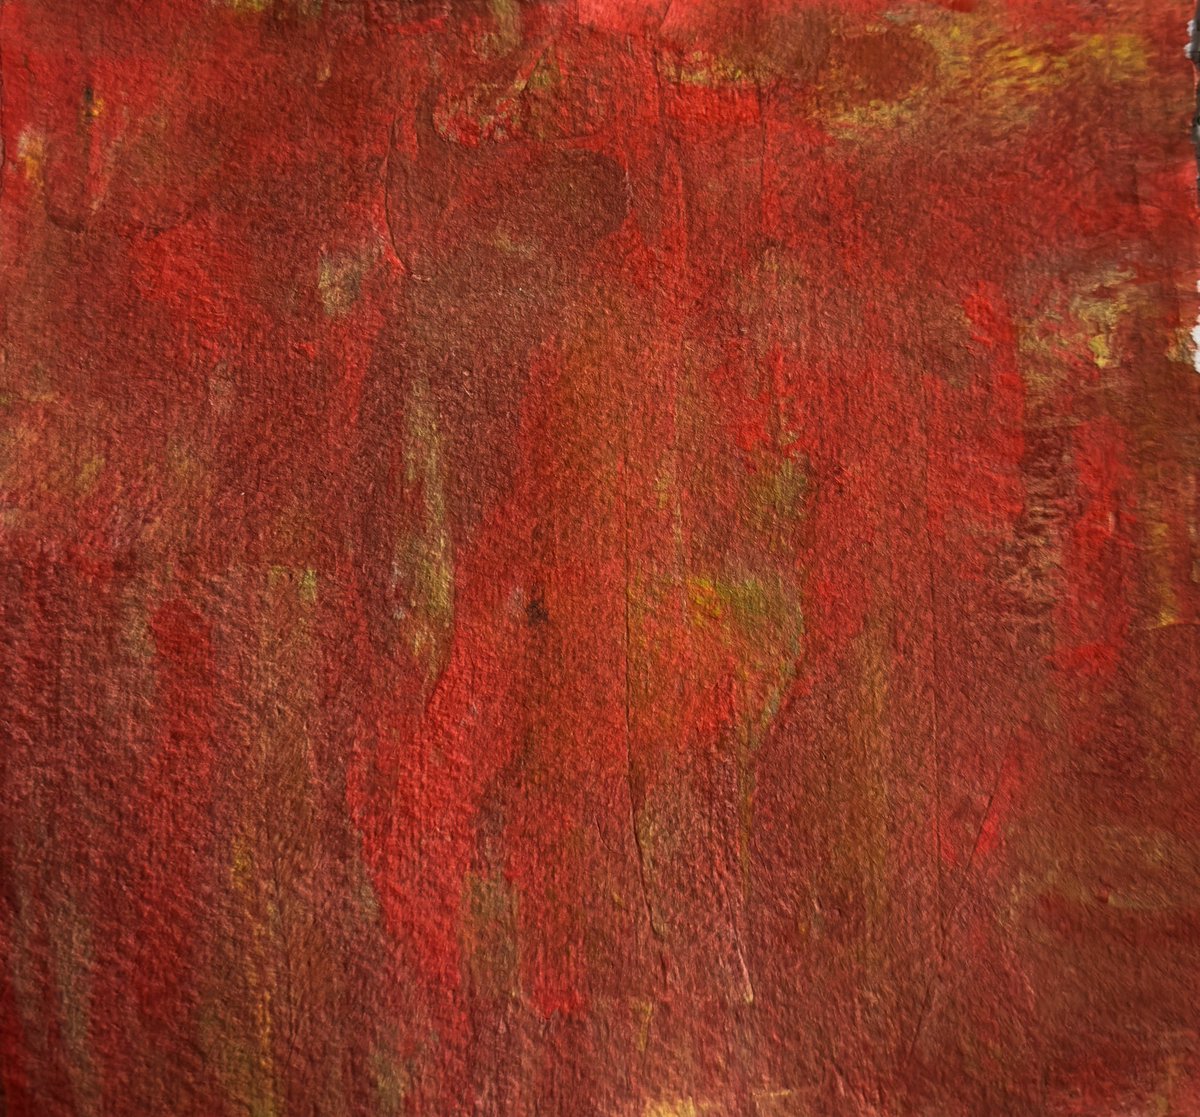 ‘Ask’
Acrylic on cotton rag
5.14” x 6.5”

#art #painting #abstractpainting #abstractexpressionism #abstractartist #abstractartwork #artist #painter #artwork #artoftheday #modernart #contemporaryart #acrylicpainting #acrylicart #cottonrag #contemporaryabstractpainting